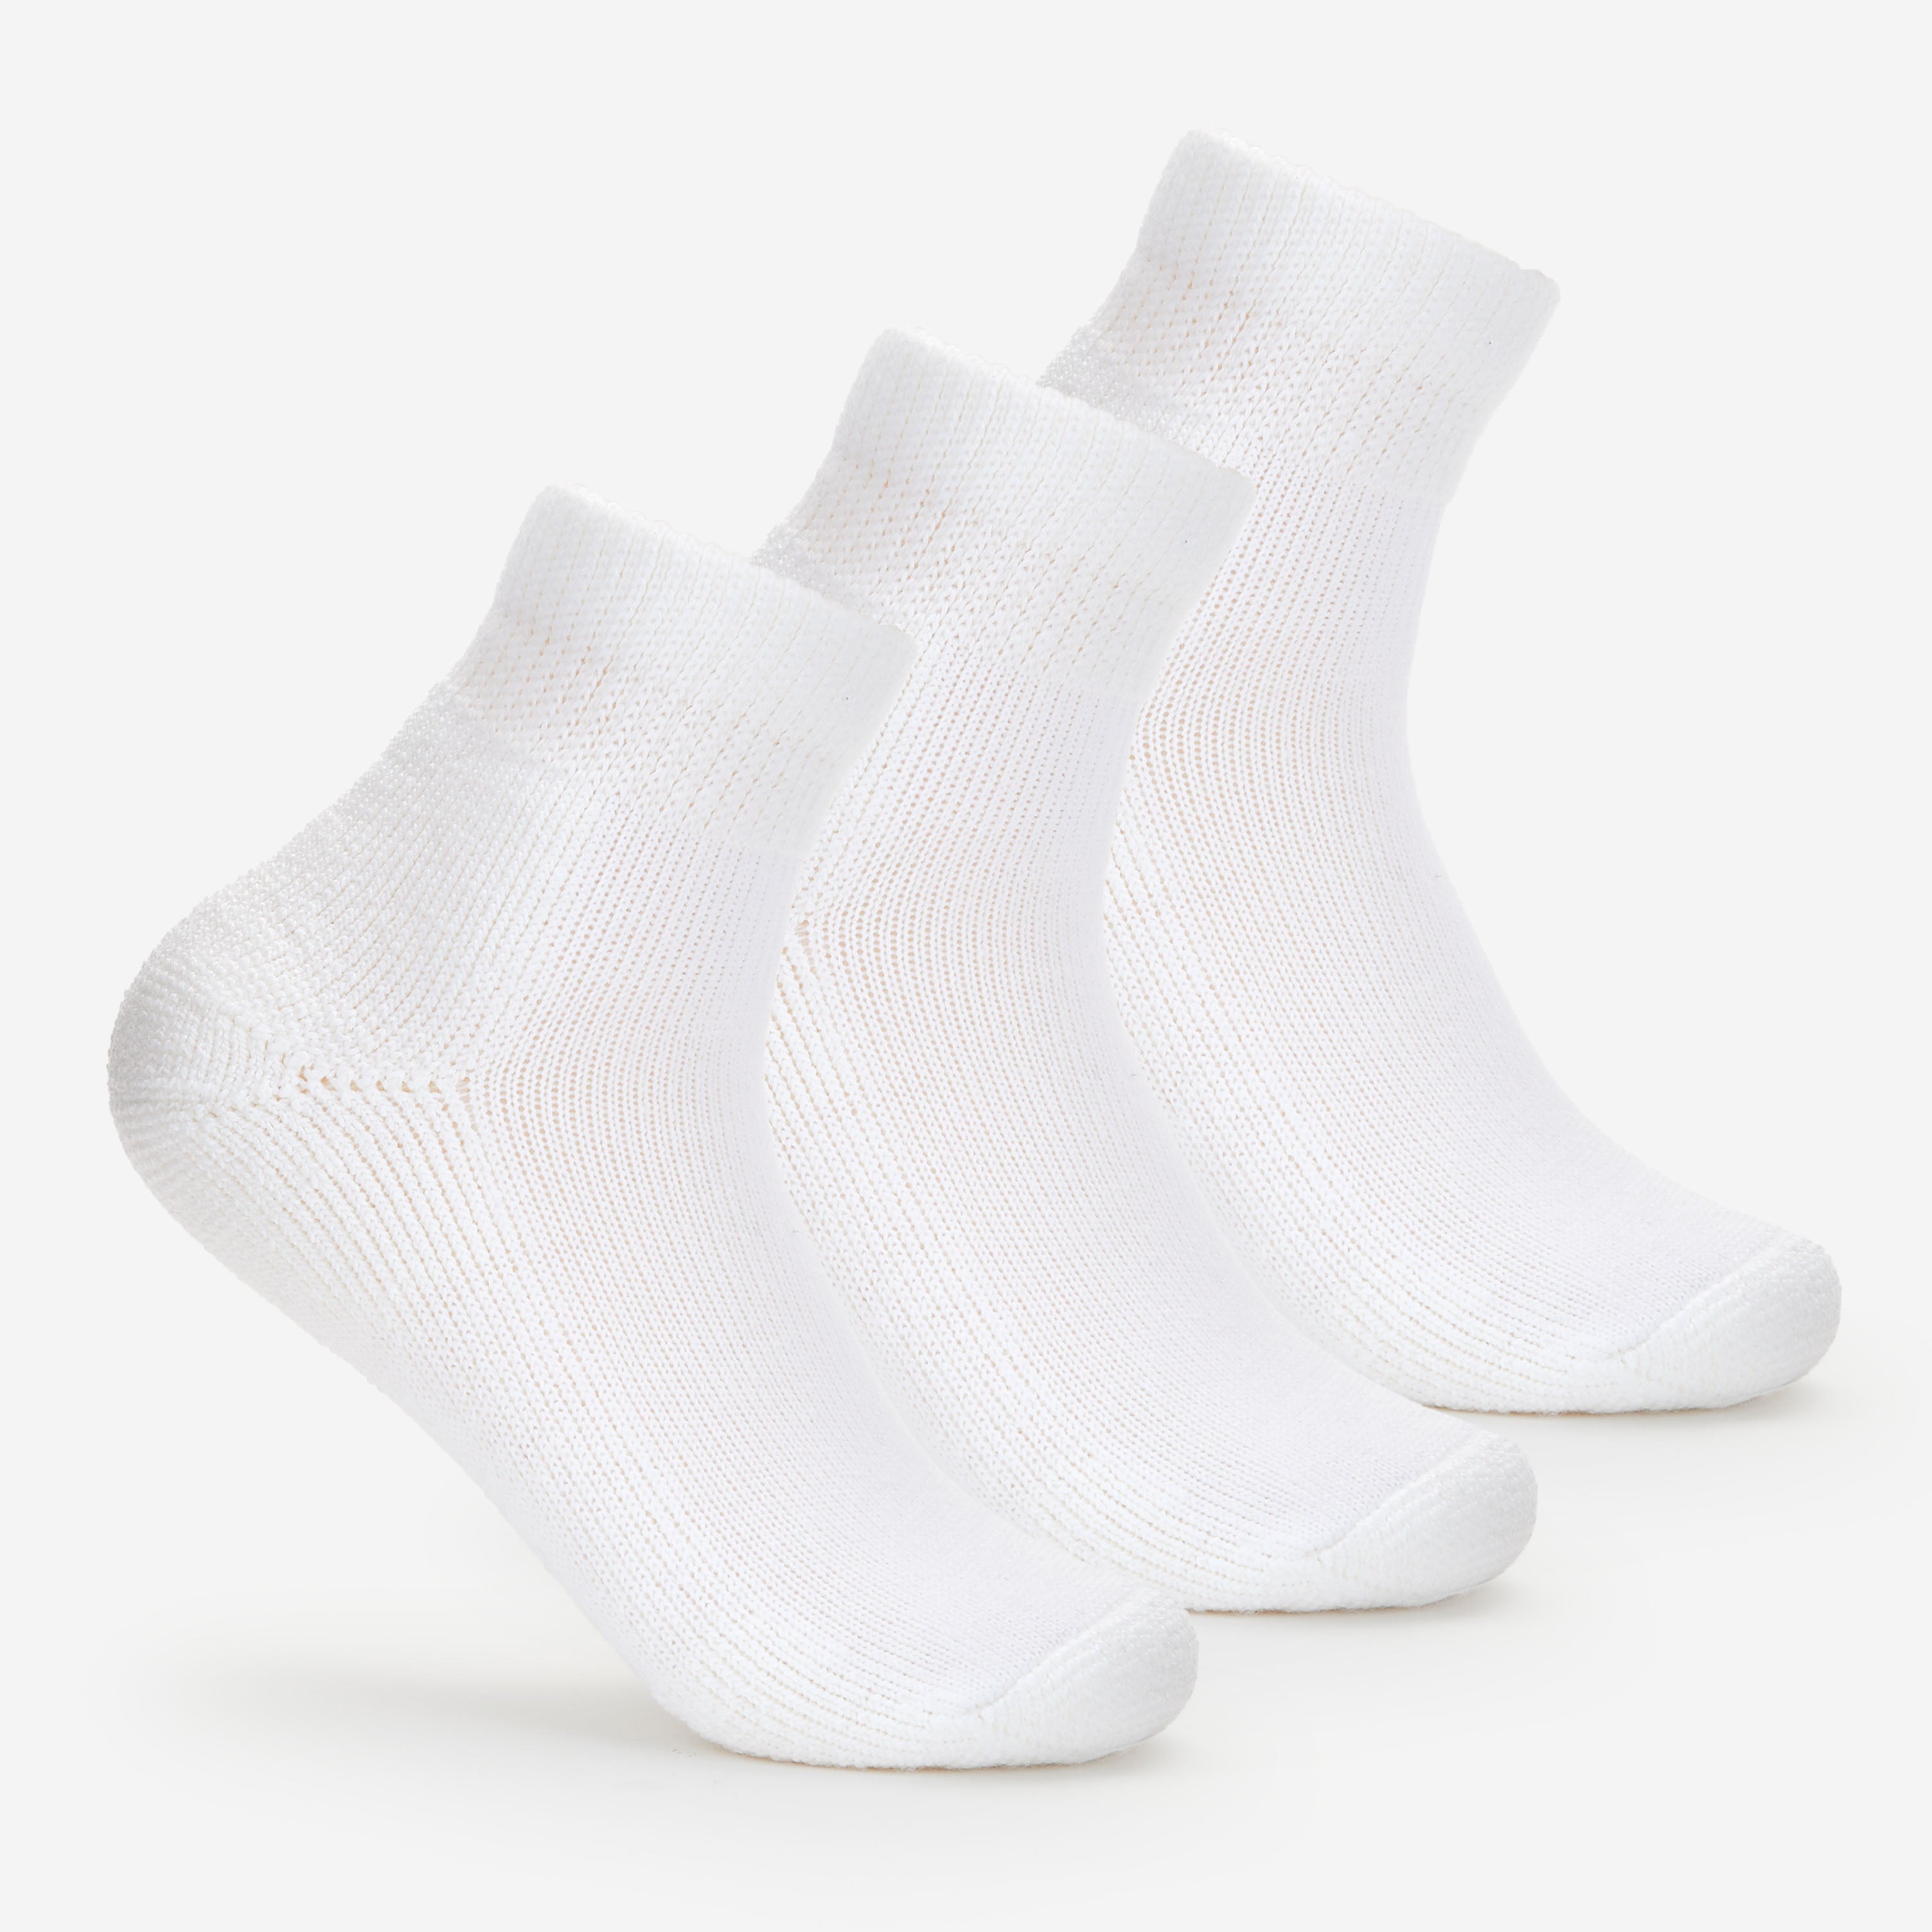 Thorlo - Women's Diabetic Moderate Cushion Ankle Socks (3 Pairs) , HPWM